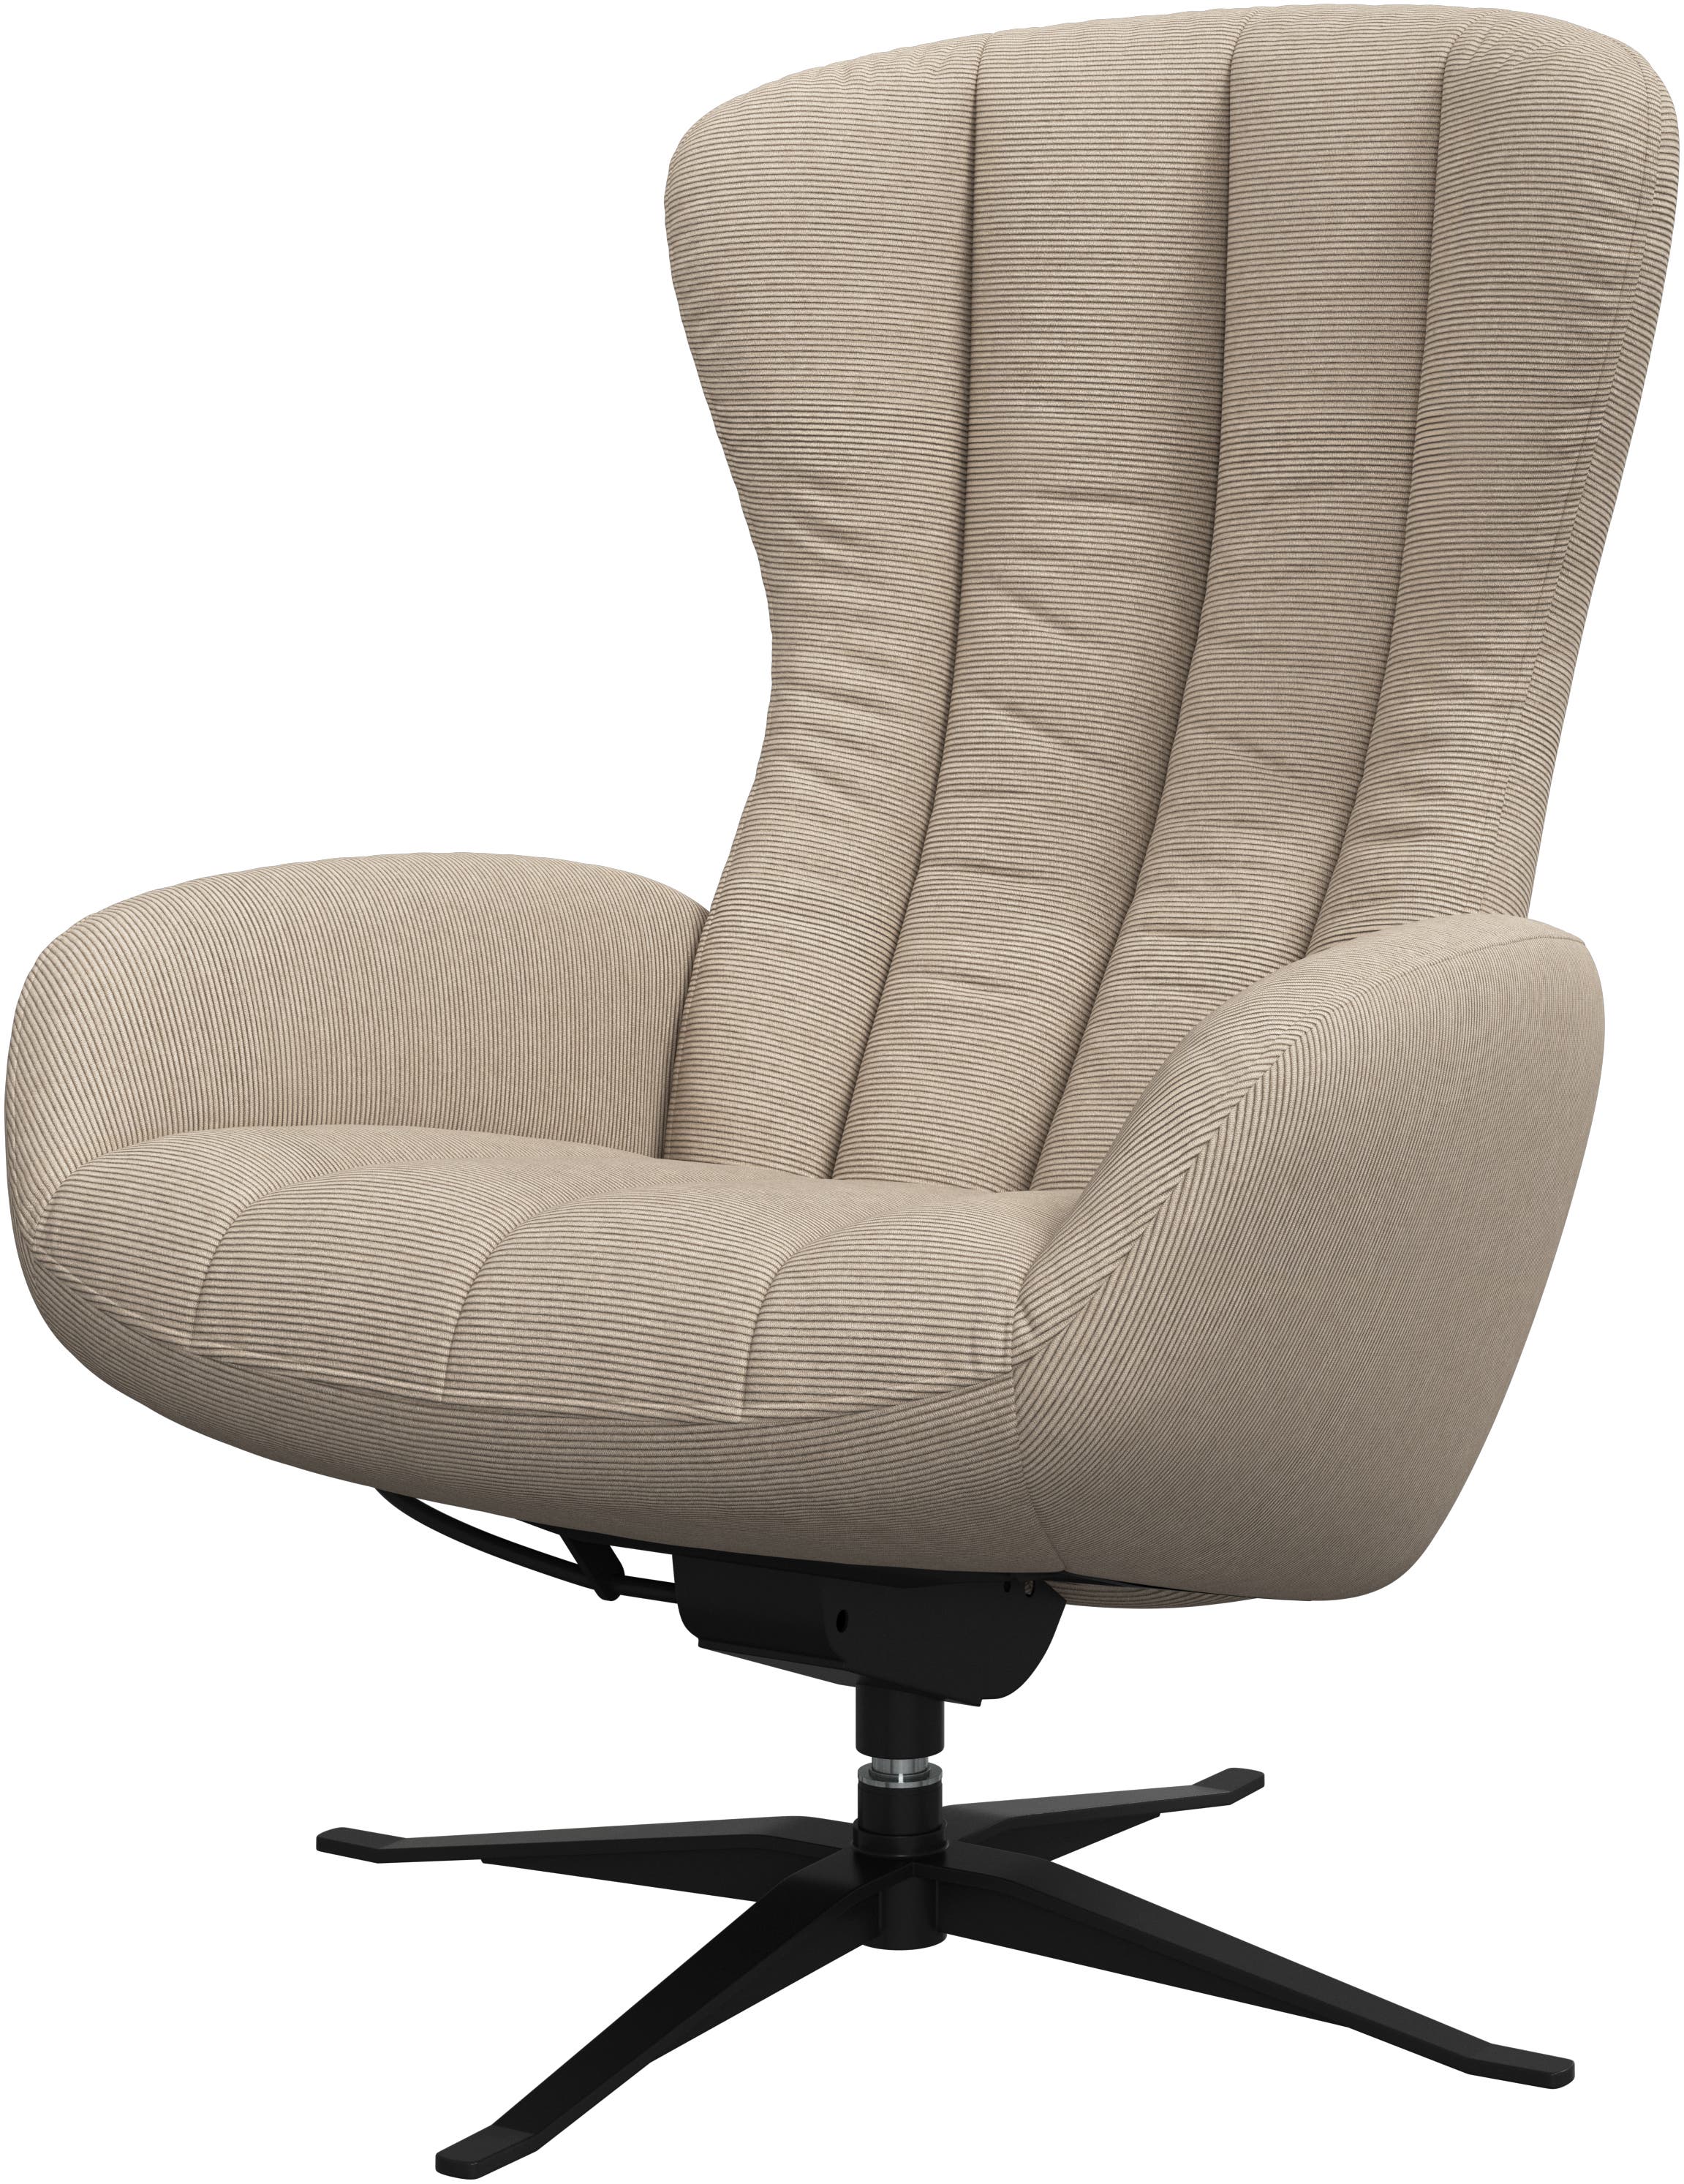 Tilburg living chair with tilt and swivel function